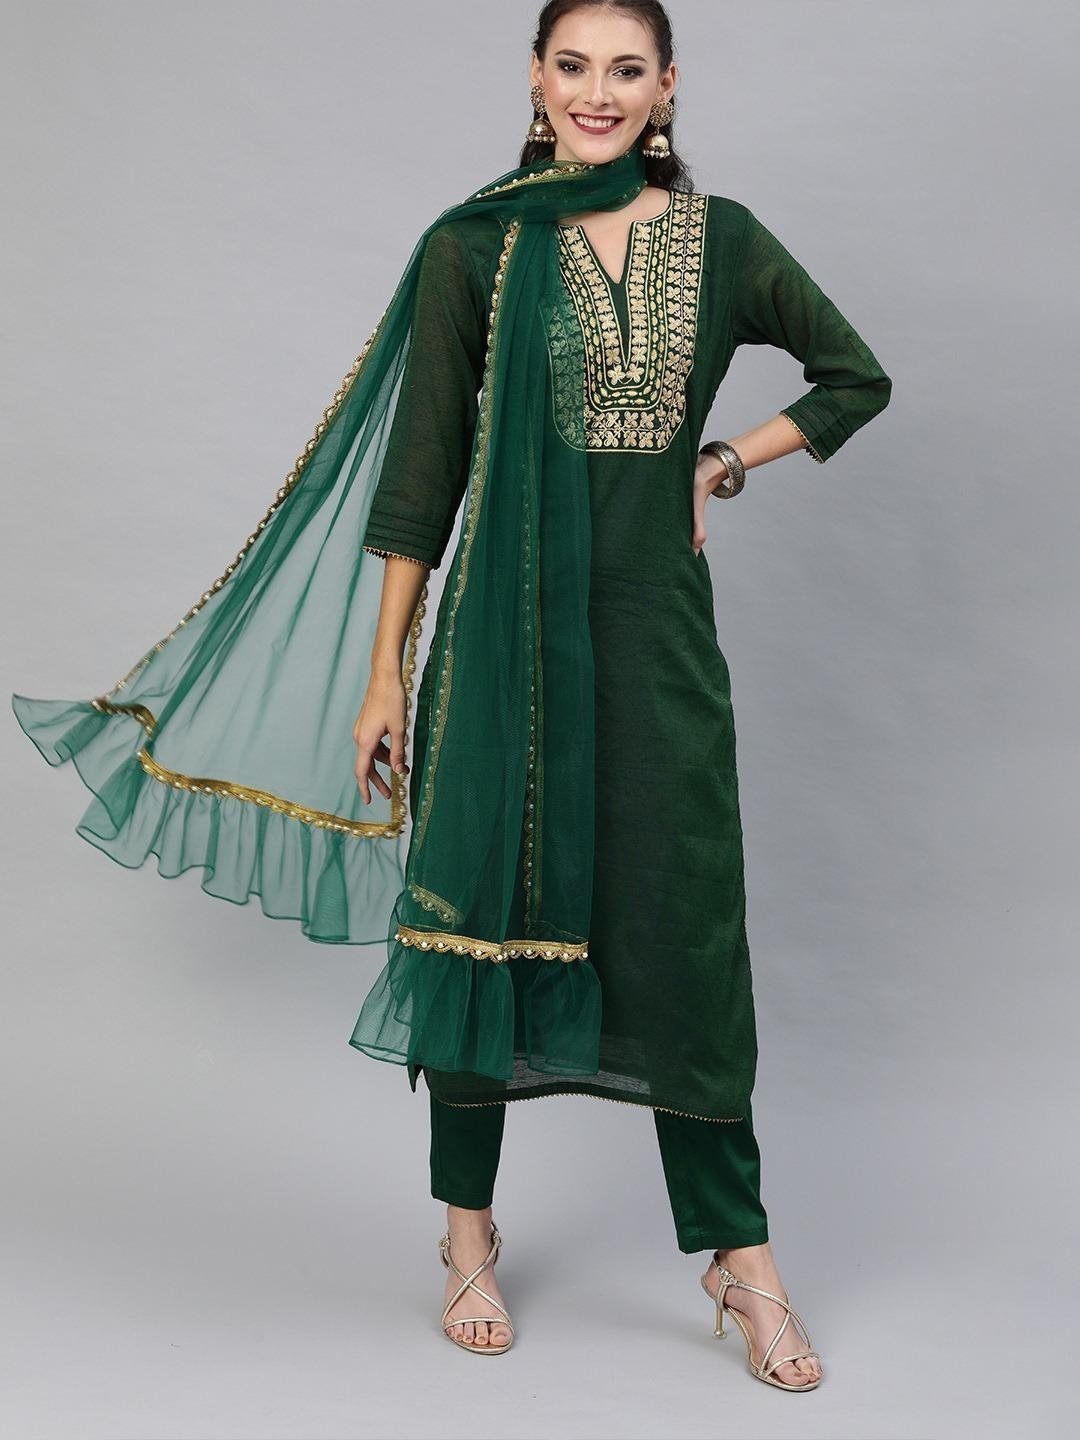 green salwar suit womens | new designs of dresses